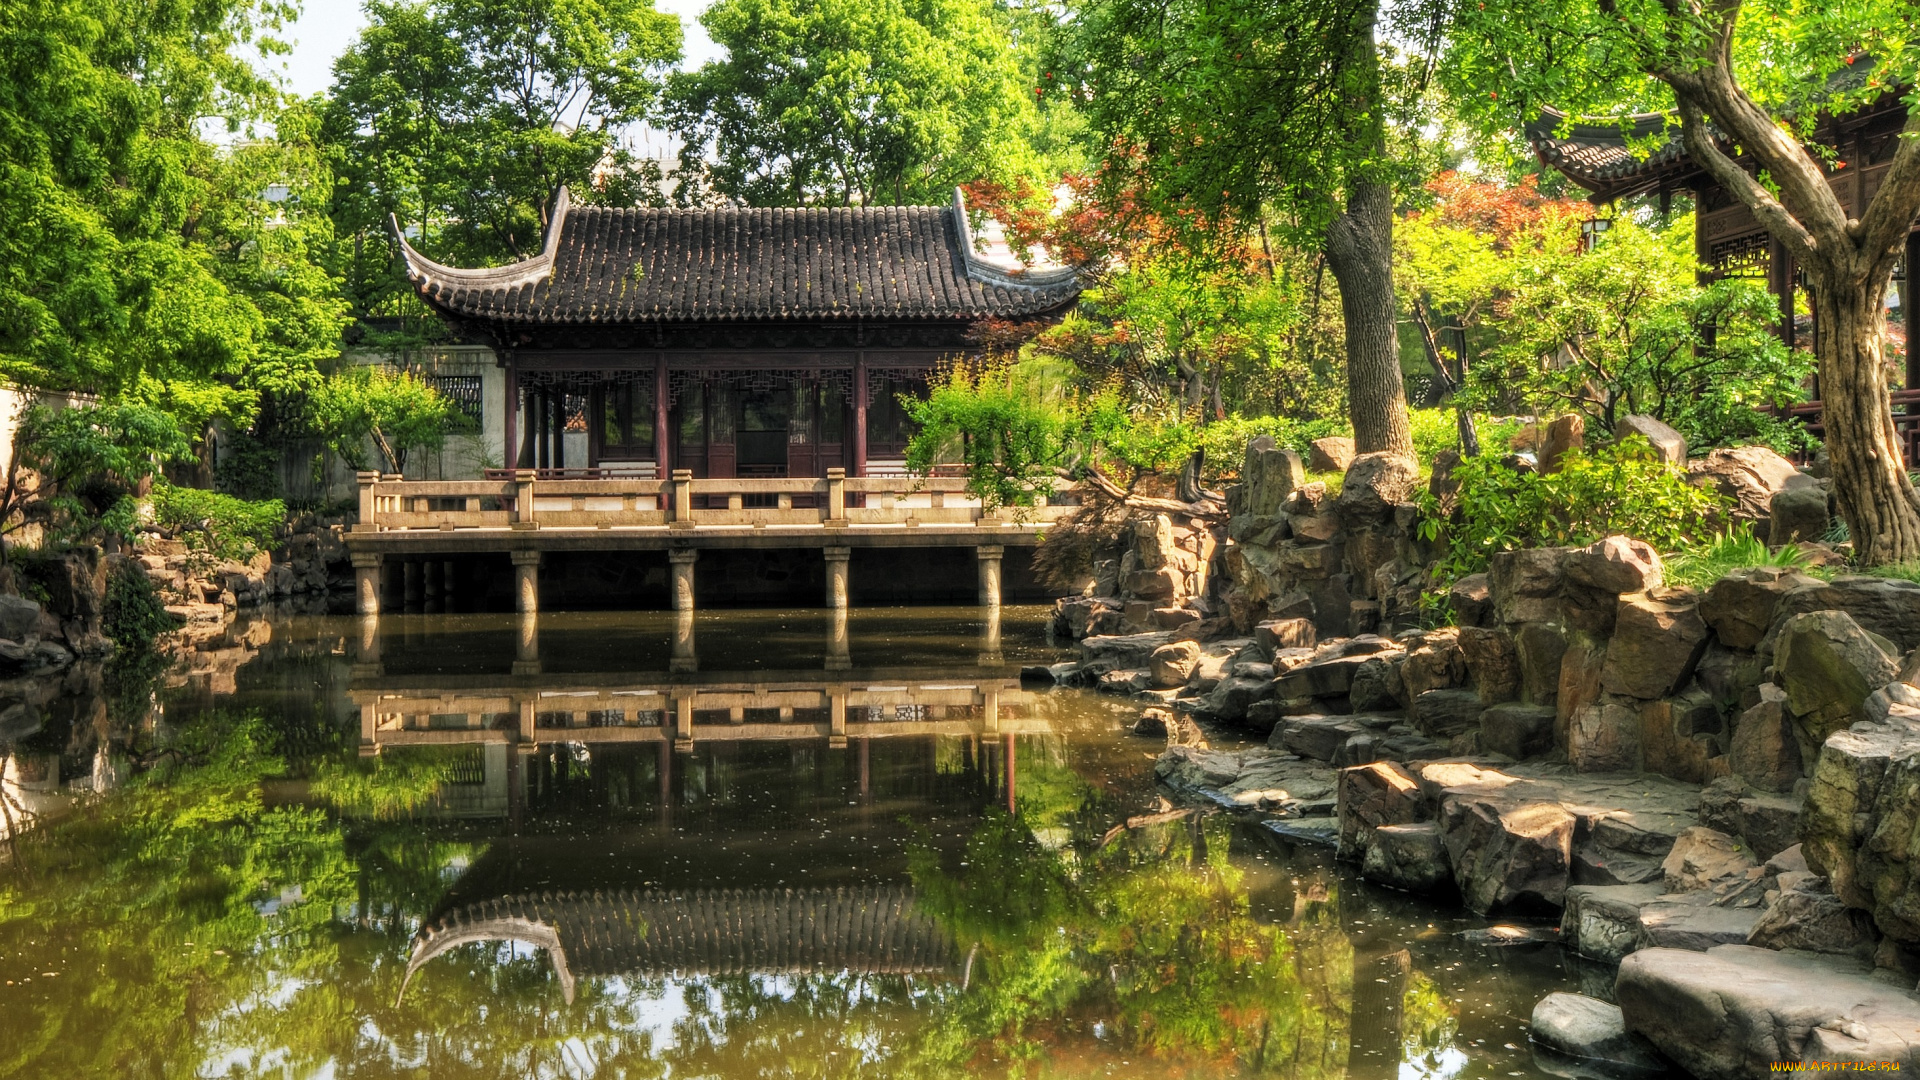 парк, юйян, шанхай, китай, природа, деревья, пруд, пагода, камни